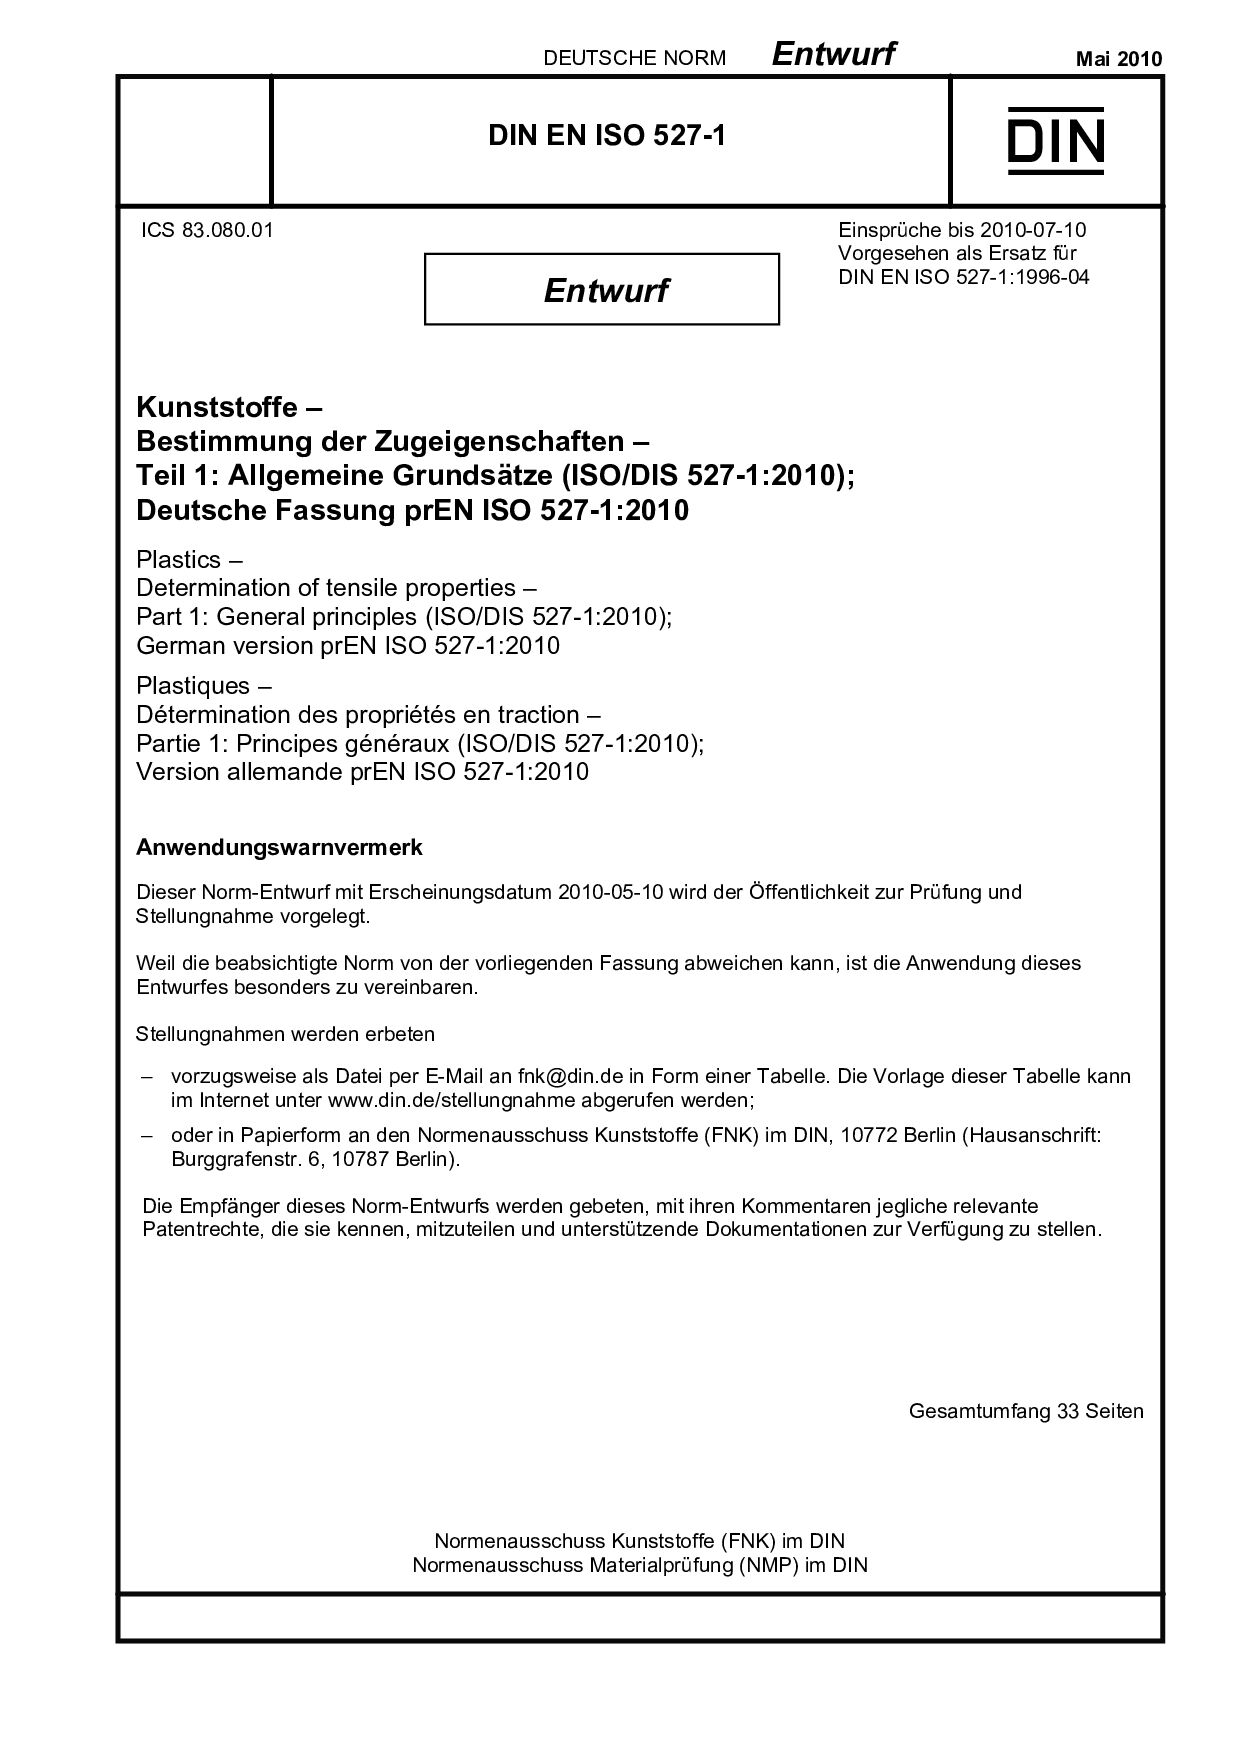 DIN EN ISO 527-1 E:2010-05